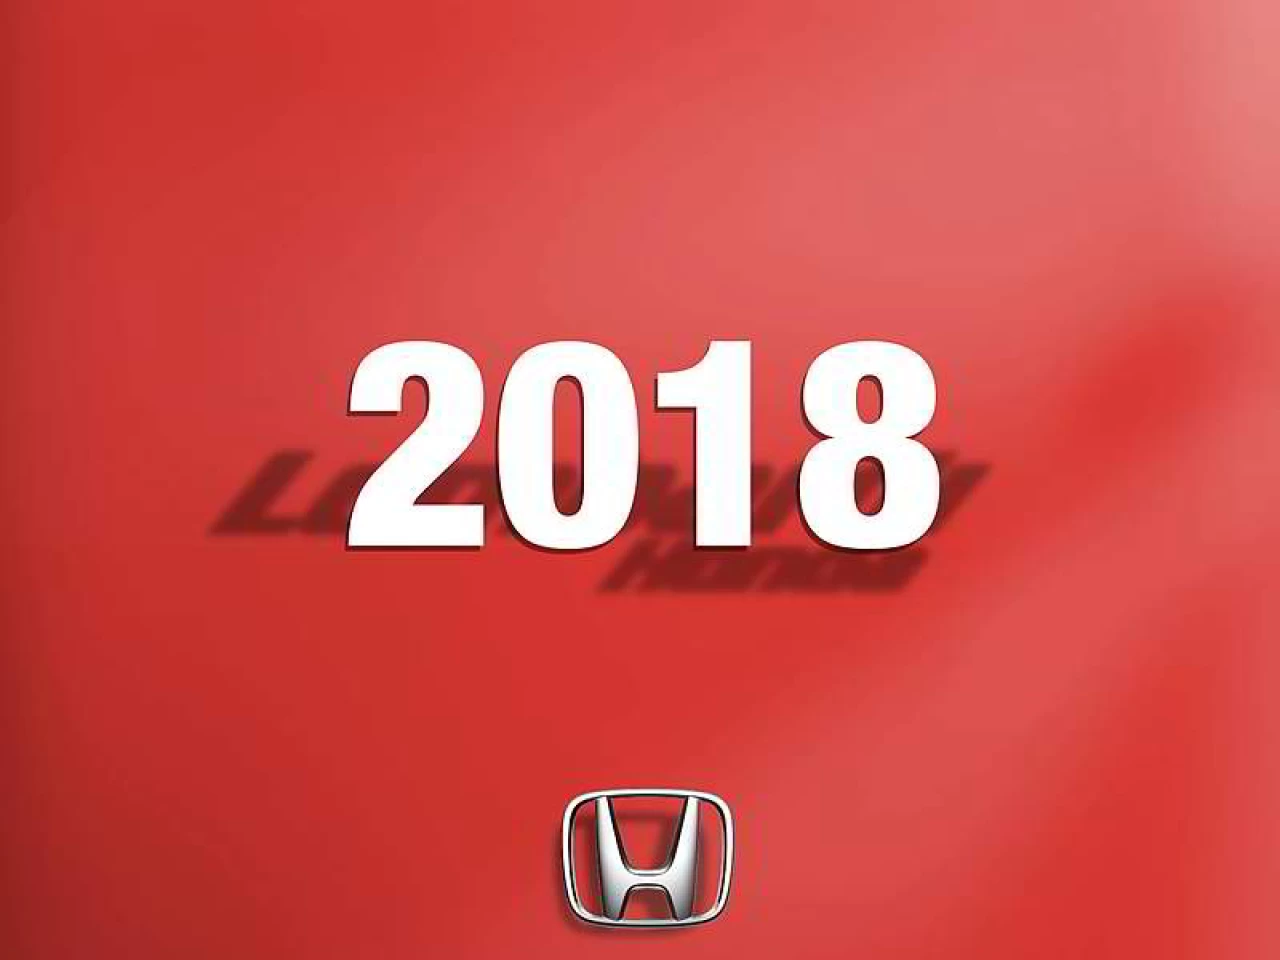 2018 Honda CR-V LX https://www.lombardihonda.com/resize/b990ff35b810a3abc0cc817b2ca24889-1